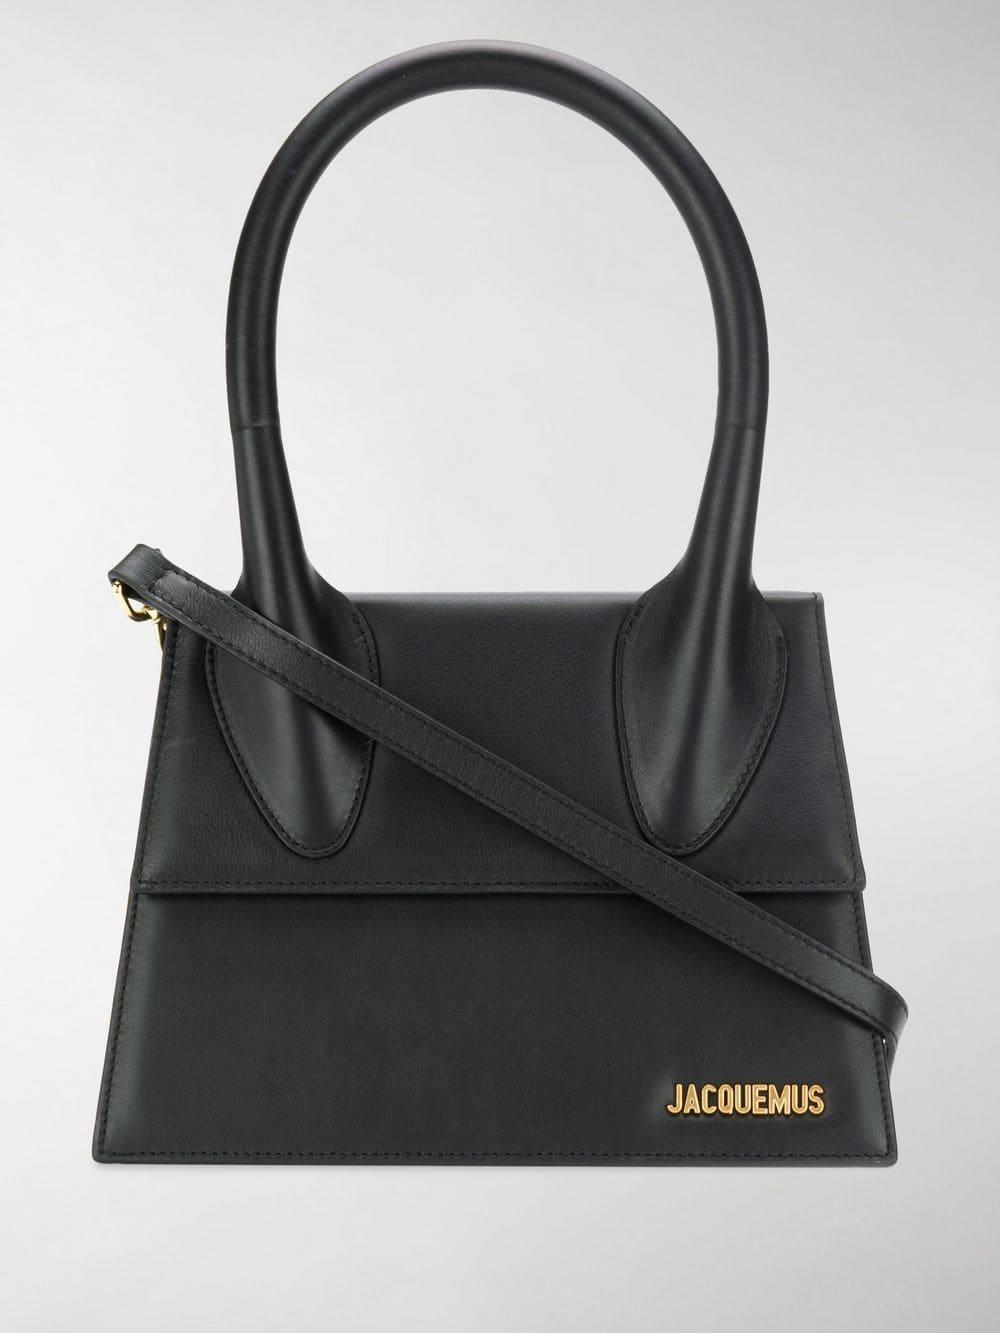 Jacquemus Le Grand Chiquito Bag in Black - Lyst